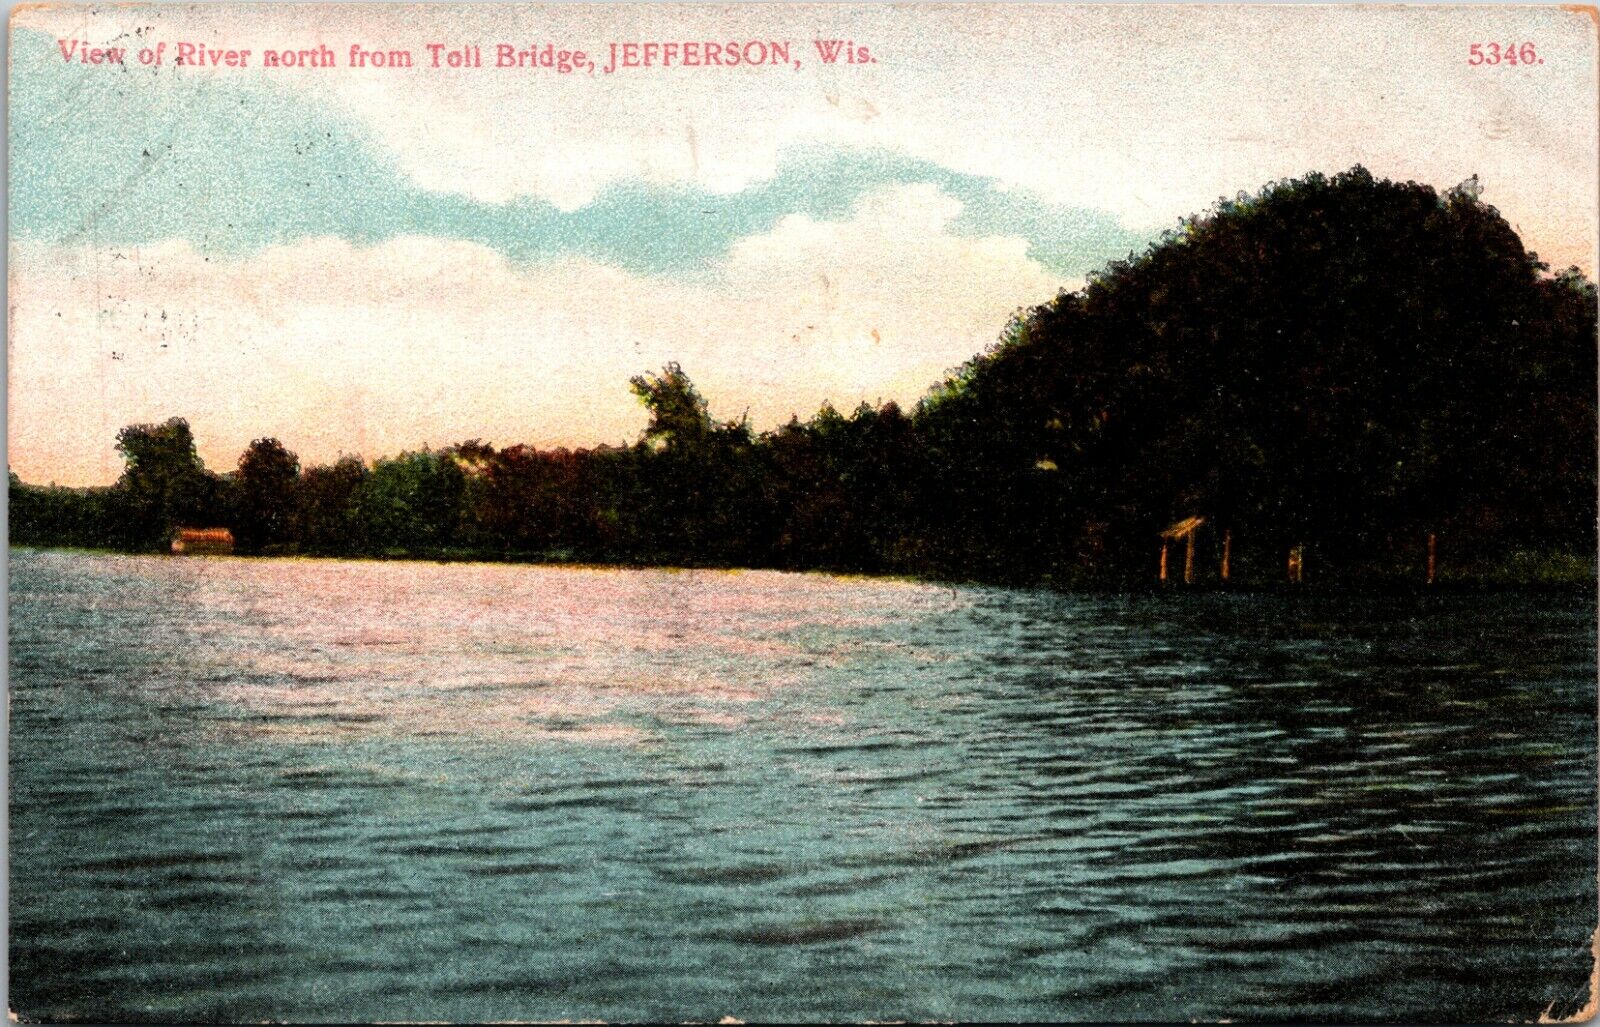 c1907, Jefferson, WI, toll bridge view, Rock River, antique postcard